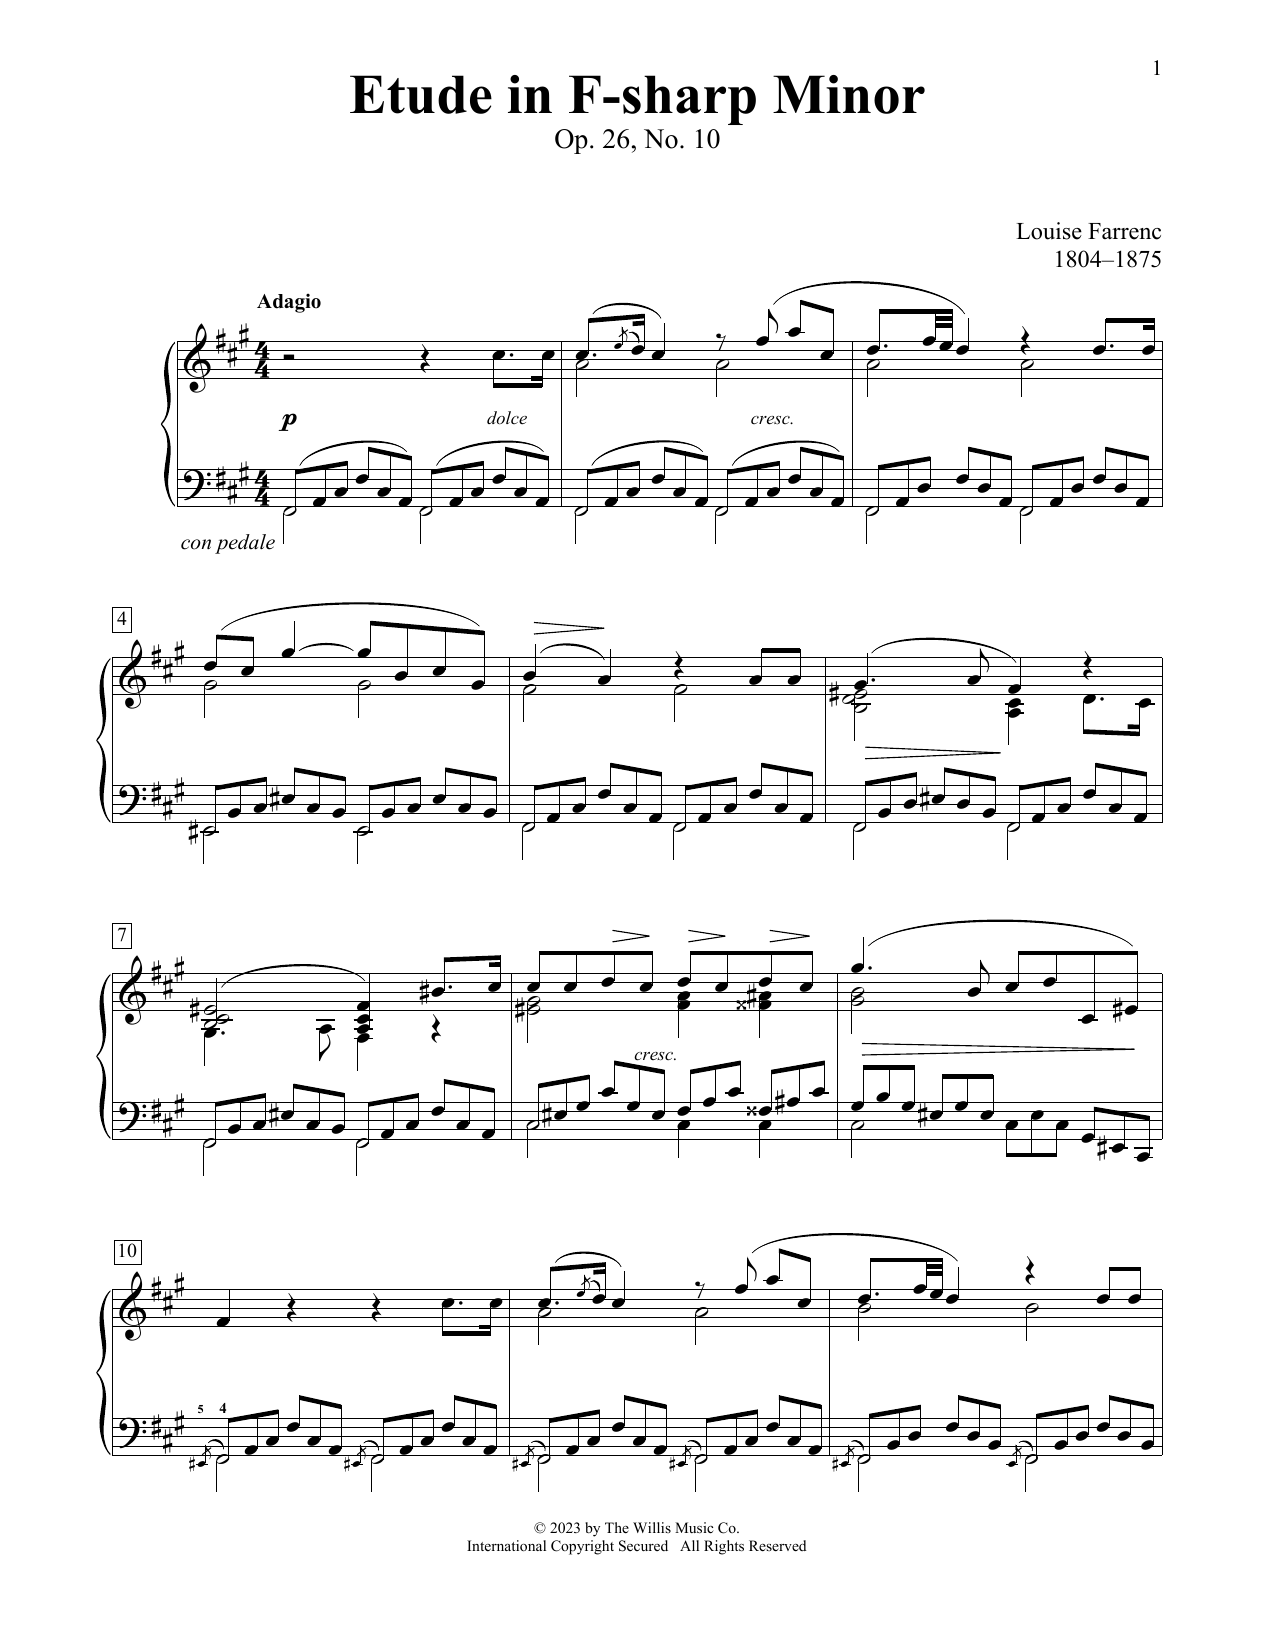 Louise Farrenc Etude In F-Sharp Minor, Op. 26, No. 10 sheet music notes printable PDF score